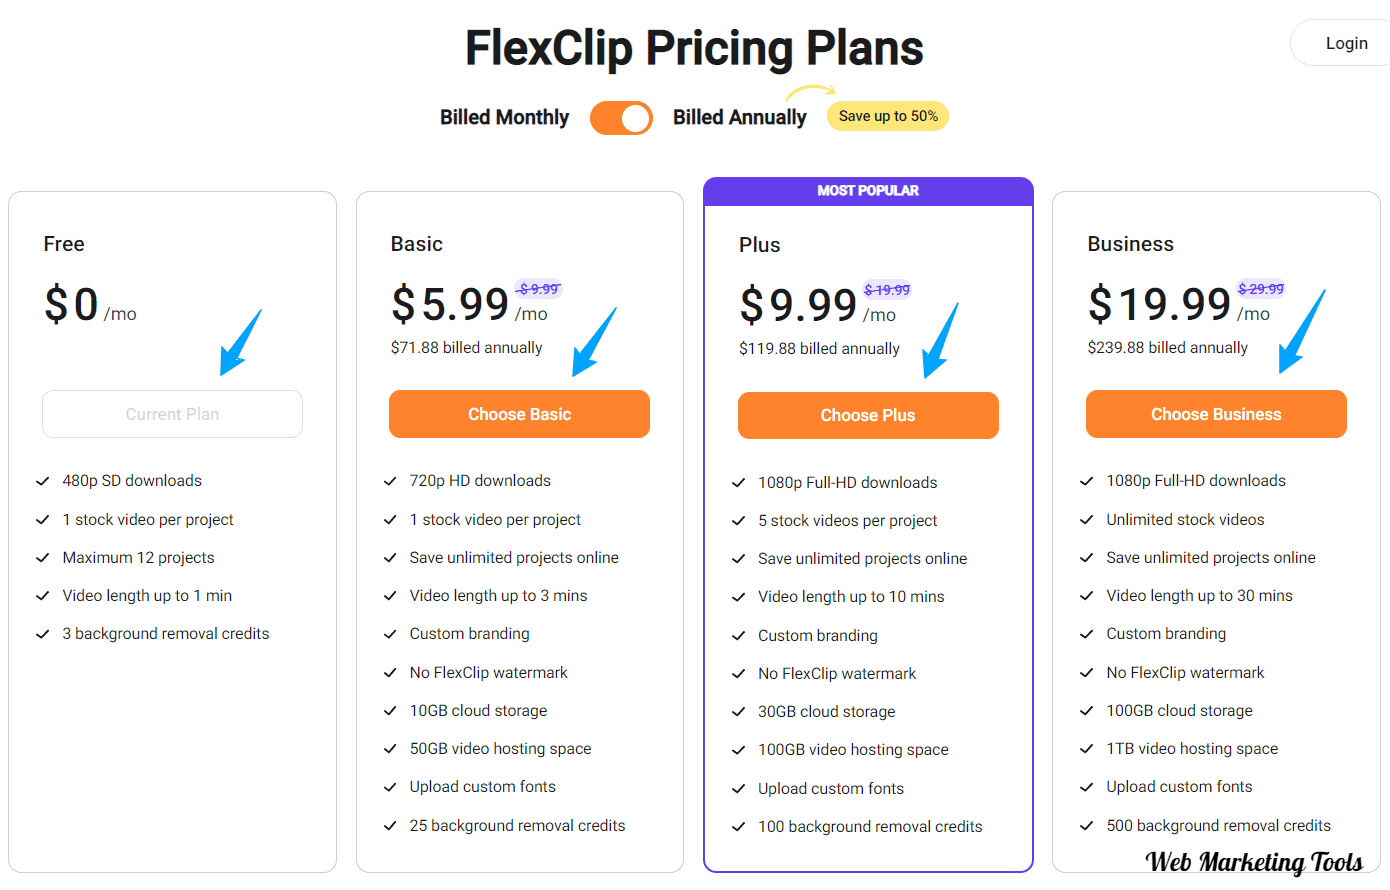 FlexClip Pricing Plans